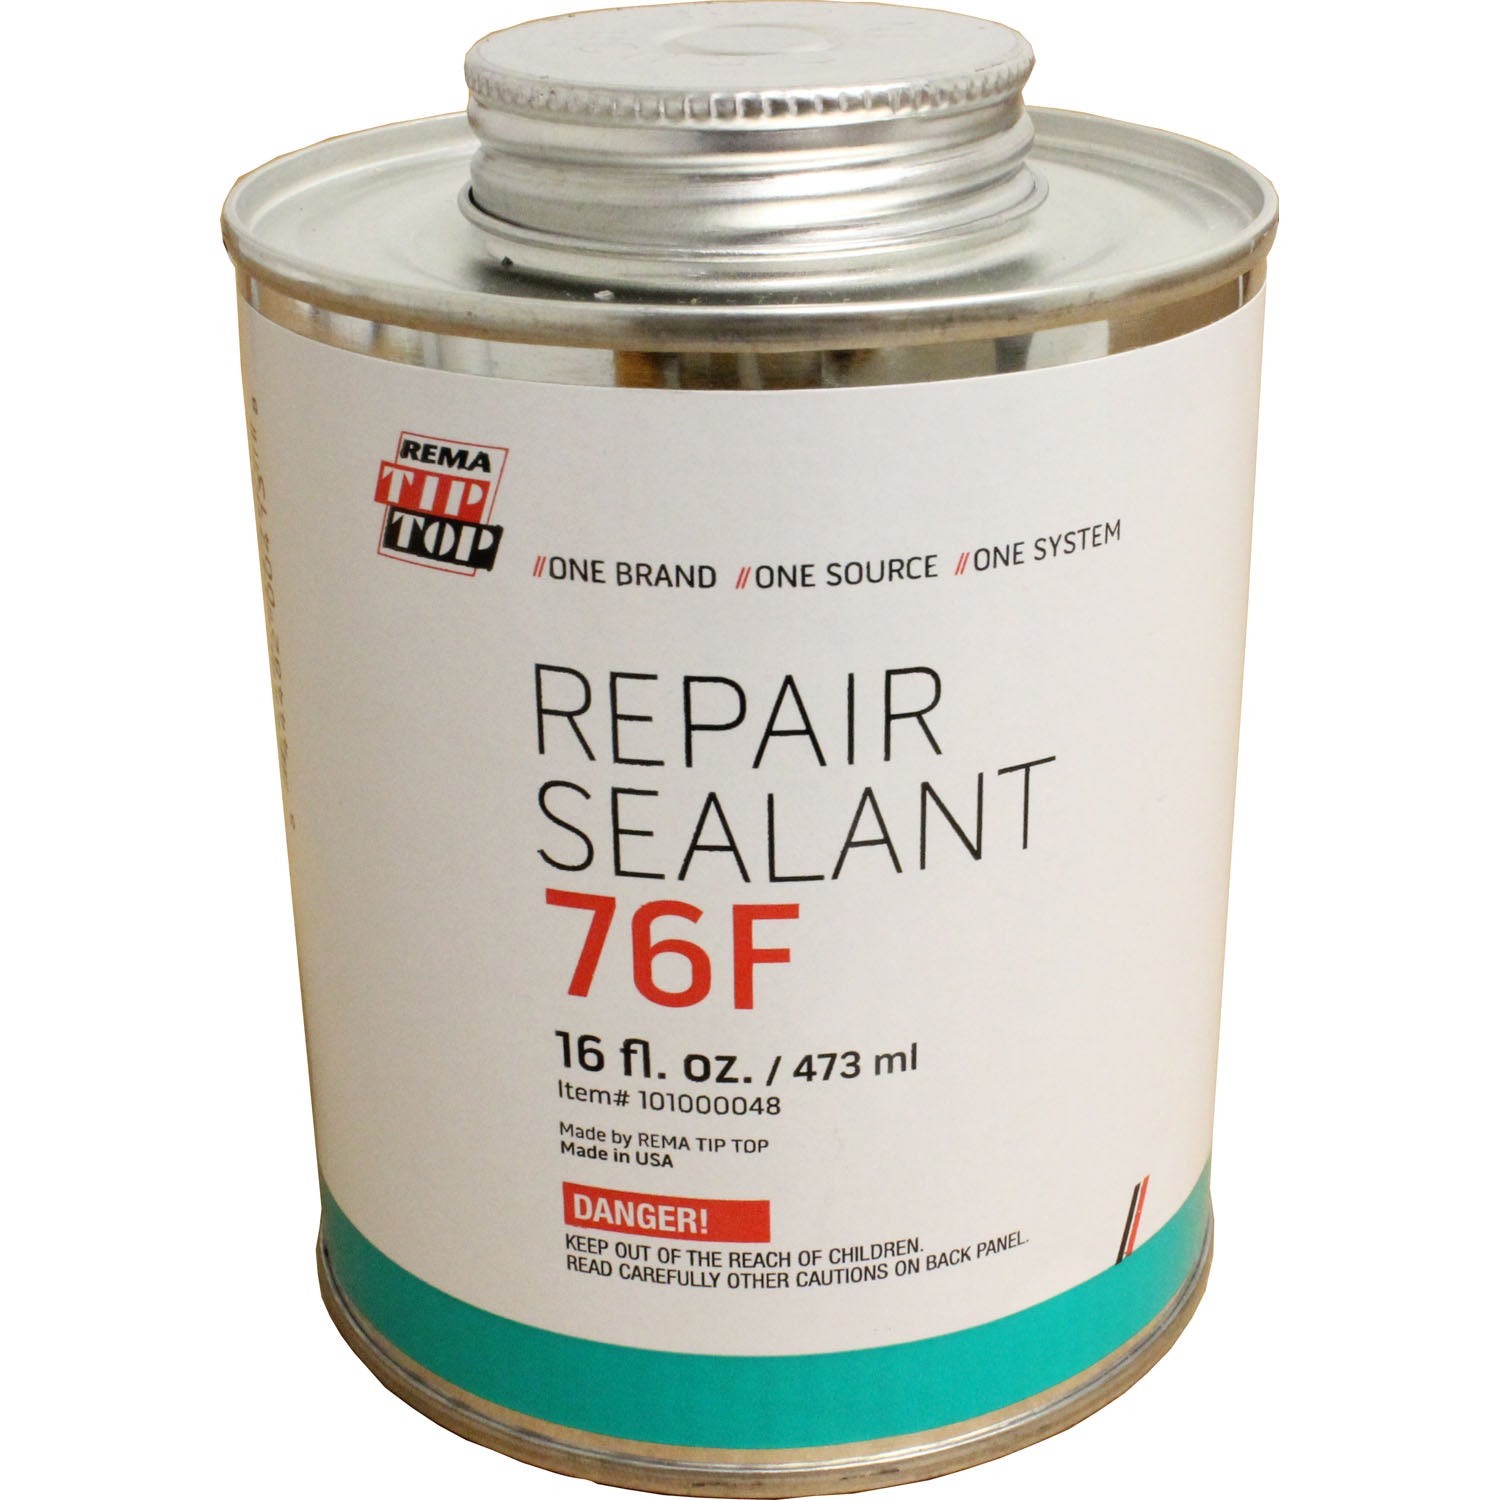 REMA TIP TOP 76F Repair Sealant with Brush Cap 16oz